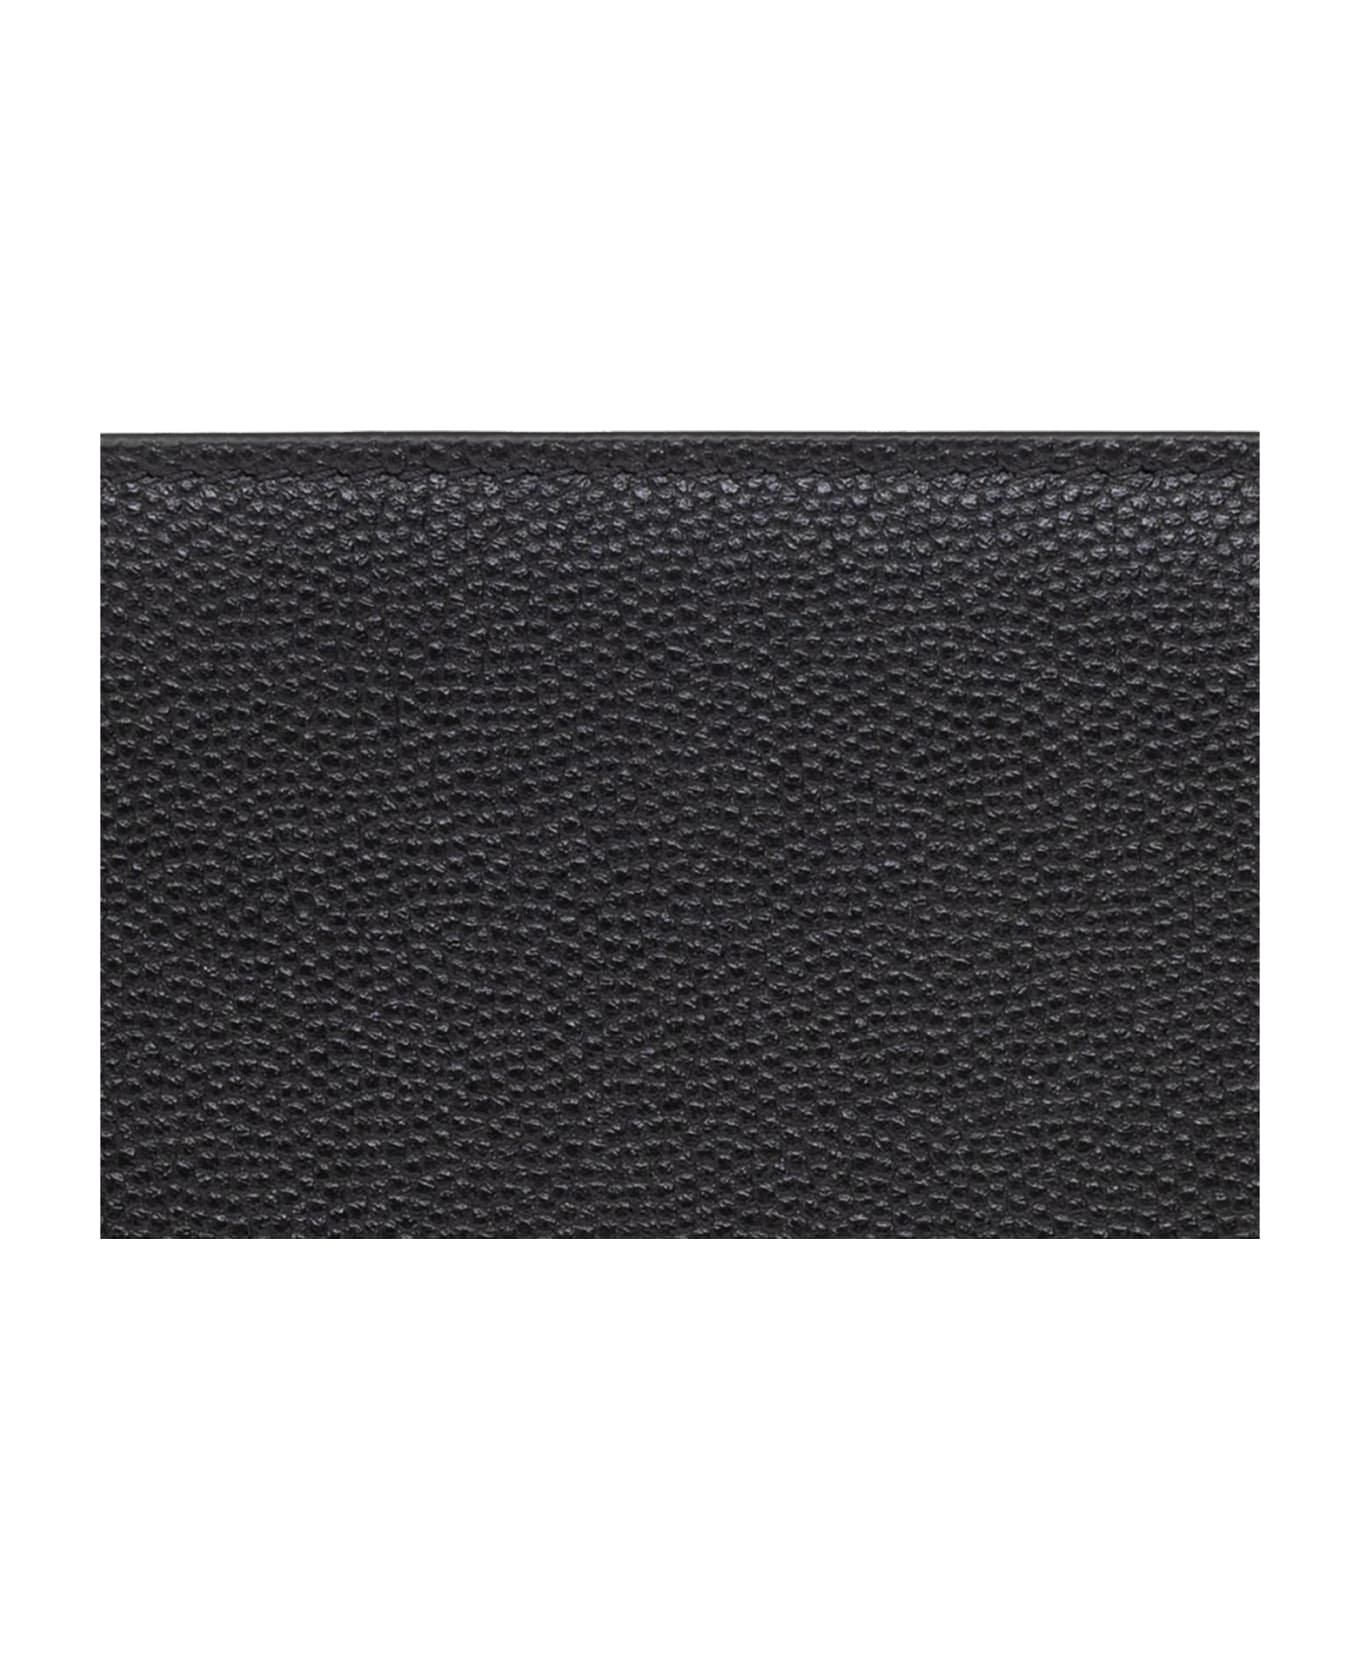 Giorgio Armani Leather Wallet - 80001